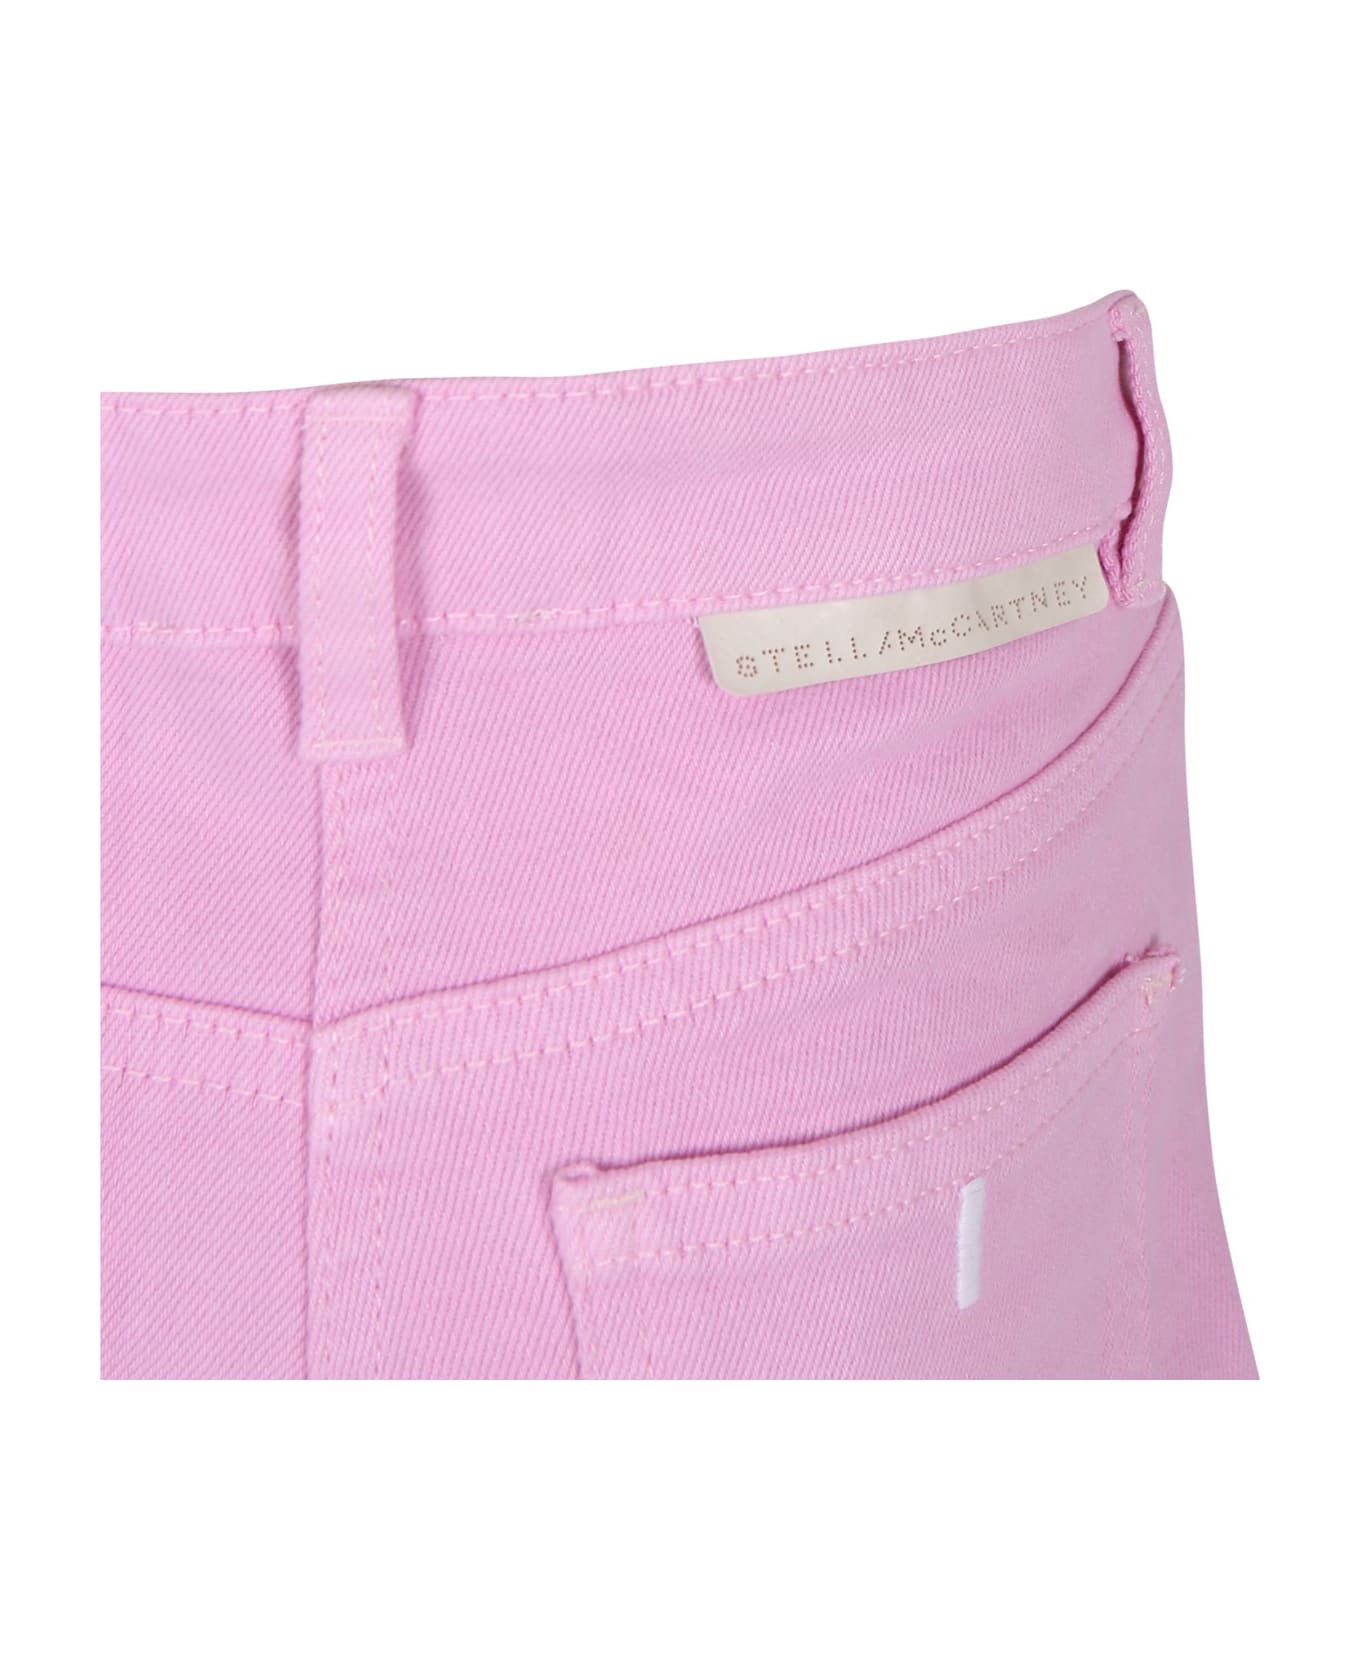 Stella McCartney Kids Pink Shorts For Girl With Logo - Pink ボトムス